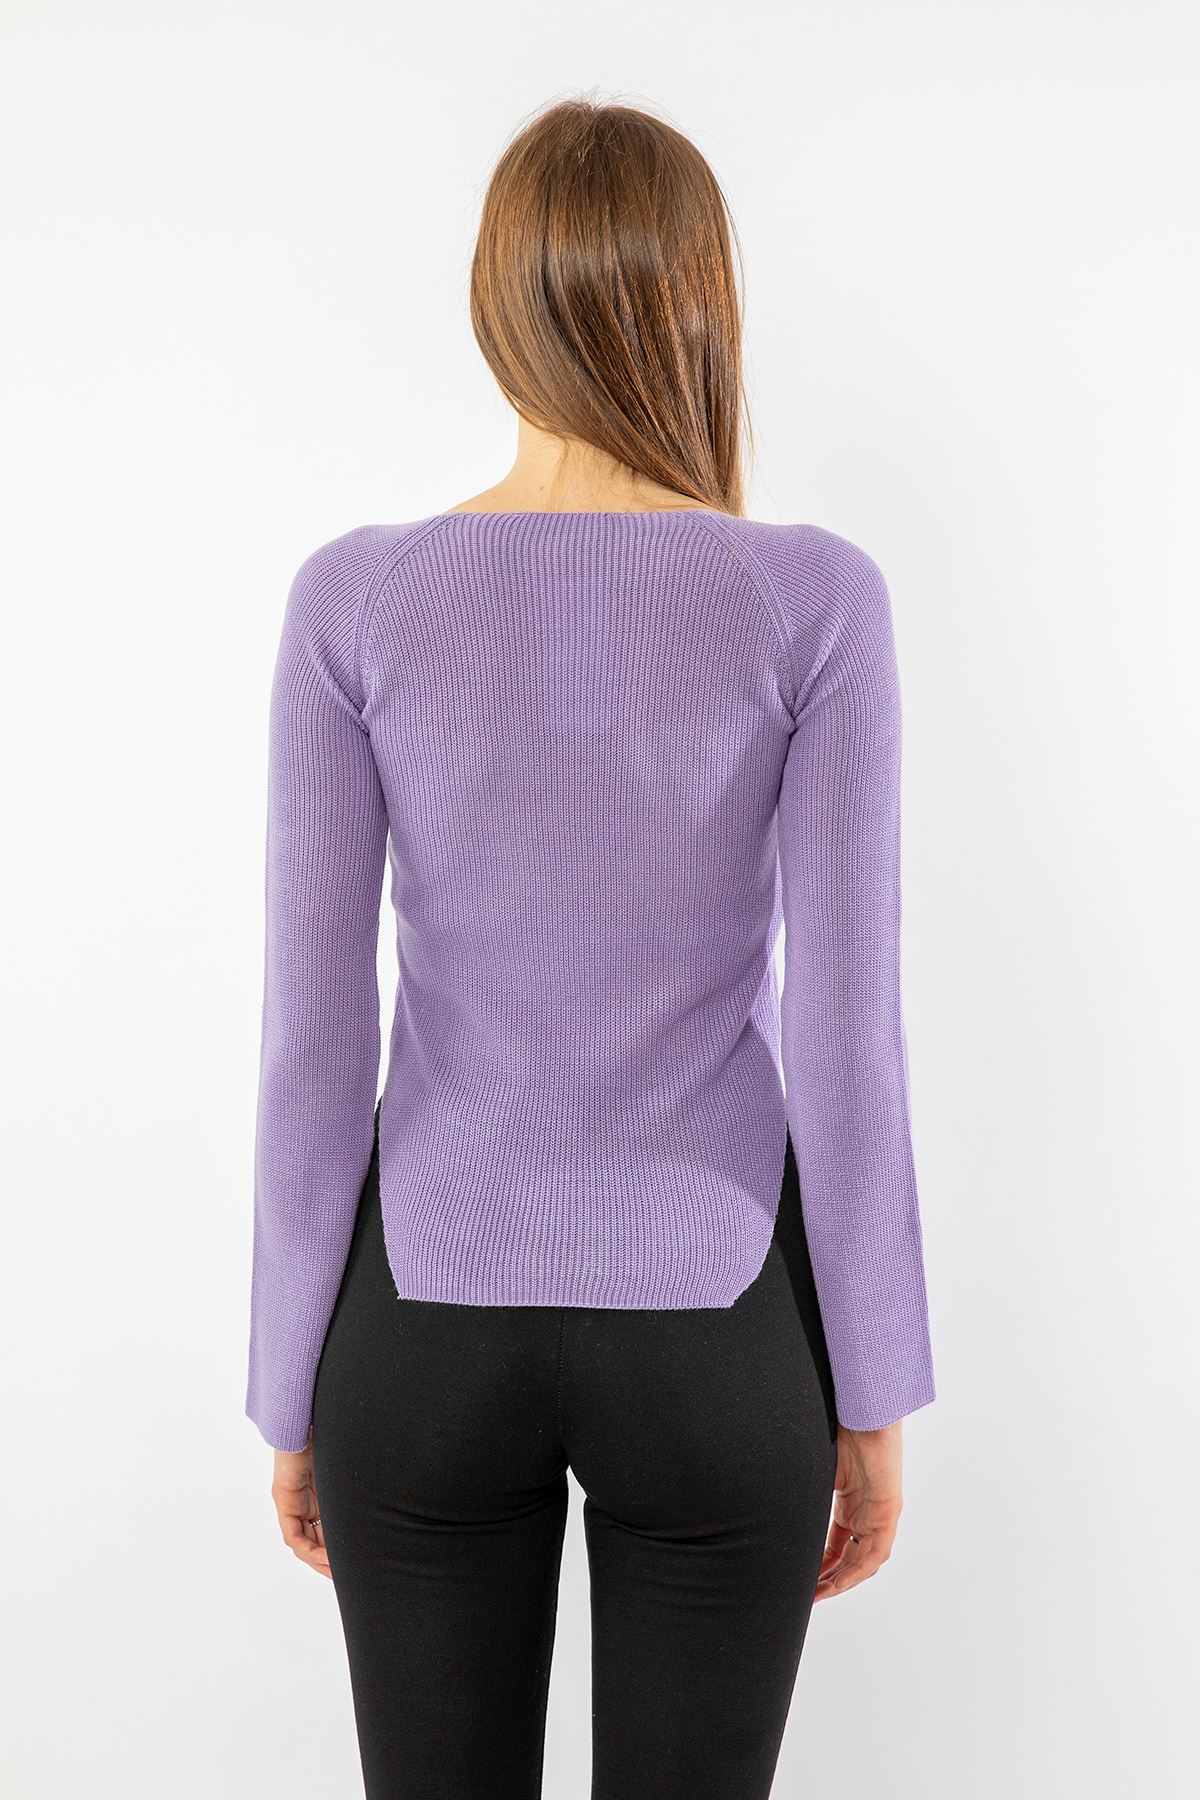 Knitwear Fabric Queen Anna Neck Short Tight Fit Asymmetric Women Sweater - Lilac